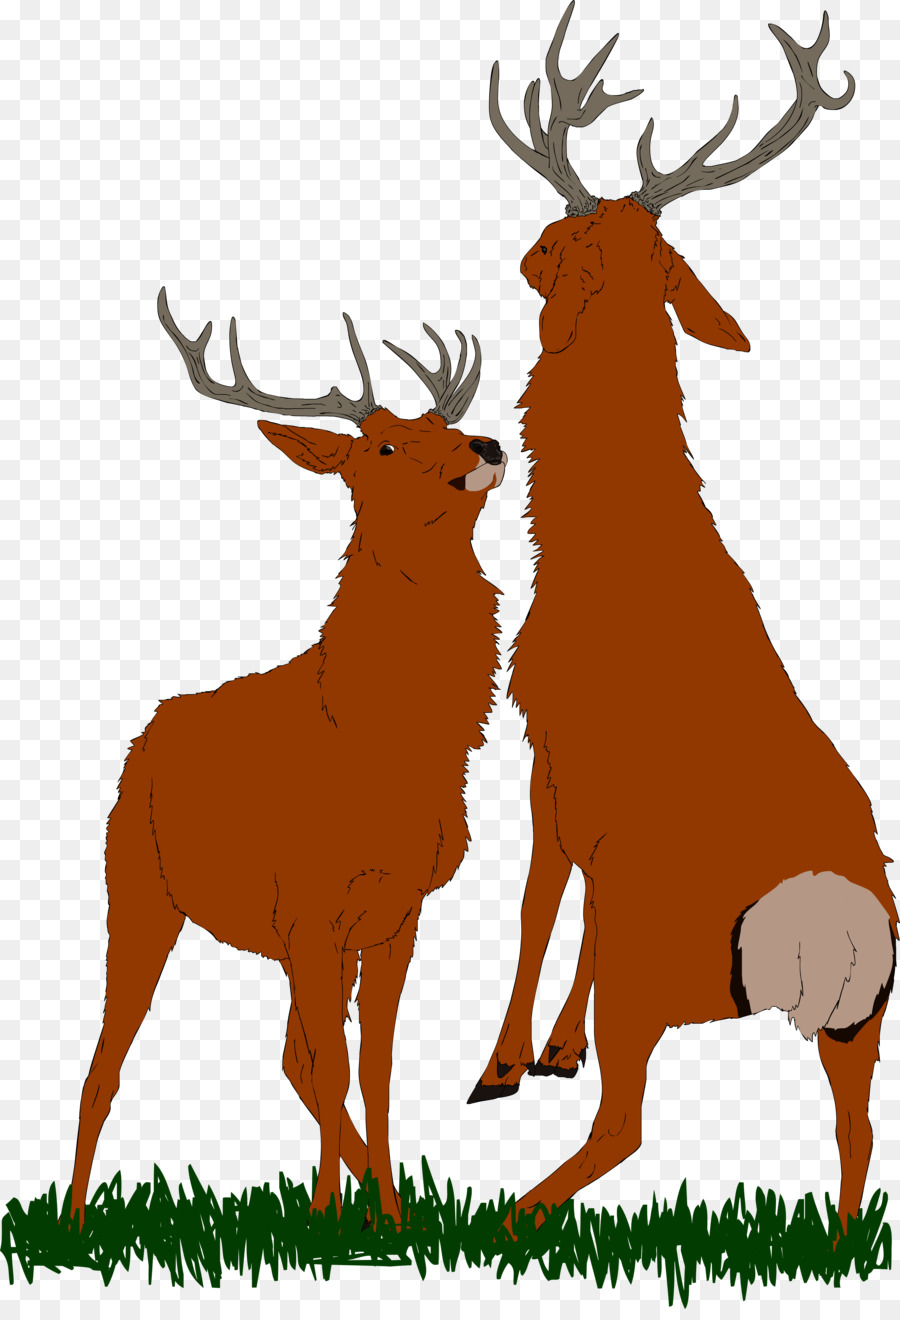 Elk Reindeer Antler Terrestrial animal Clip art - BULL FIGHTING png download - 900*1309 - Free Transparent Elk png Download.